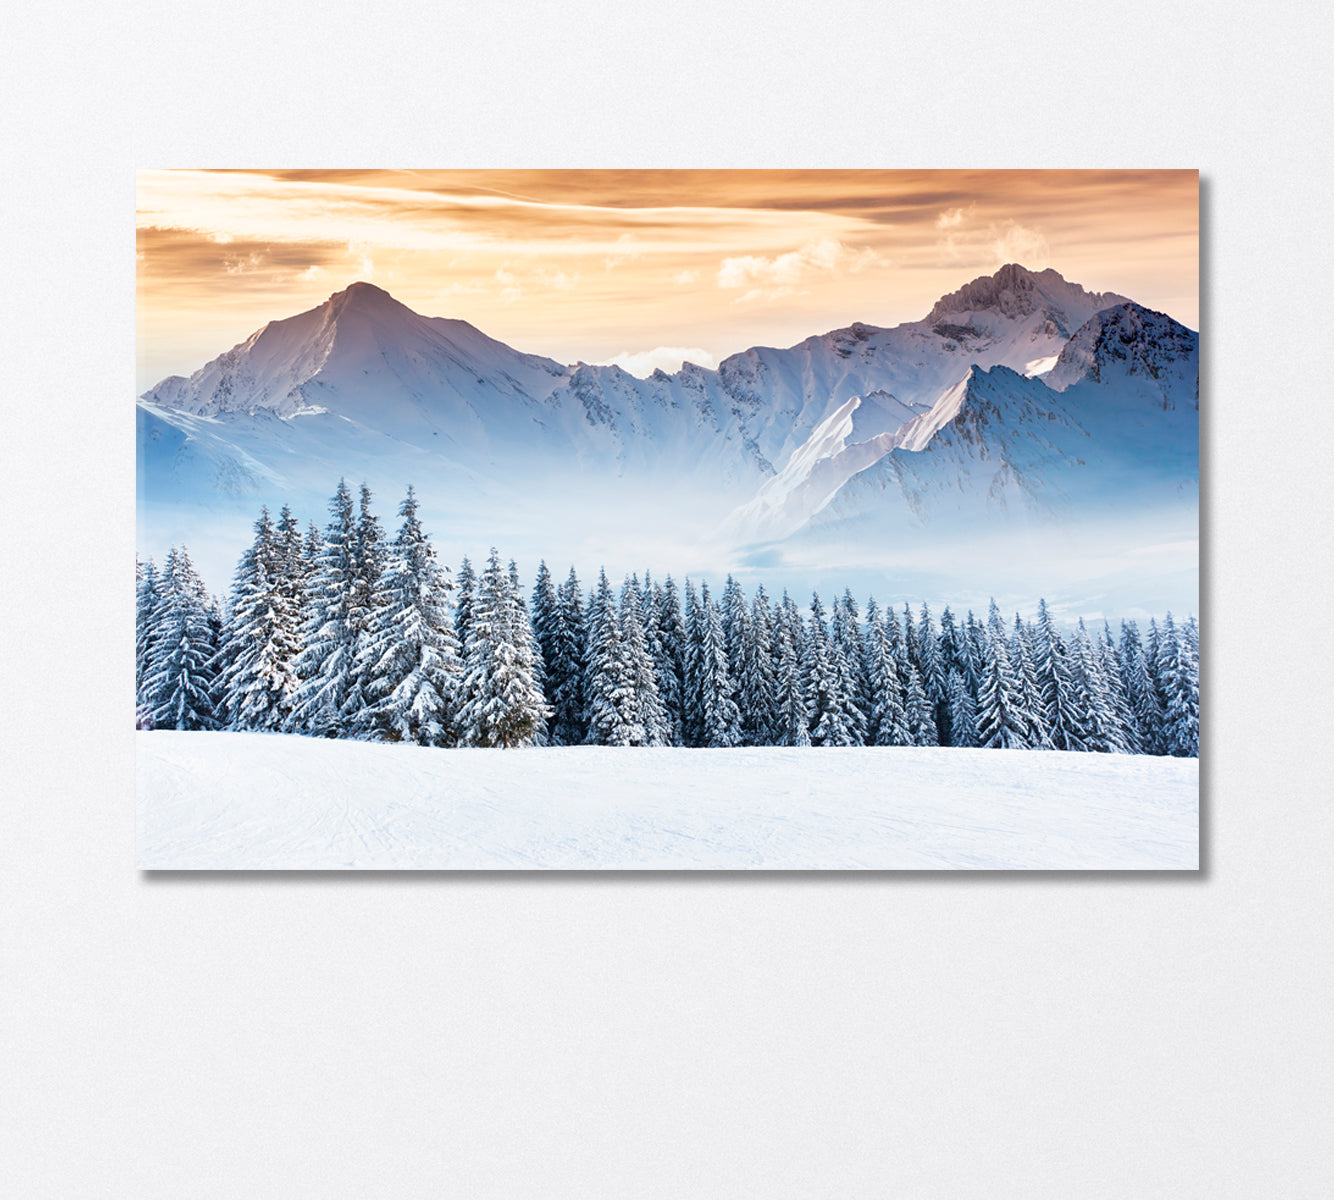 Snow Capped Mountains Fantastic Winter Landscape Canvas Print-Canvas Print-CetArt-1 Panel-24x16 inches-CetArt